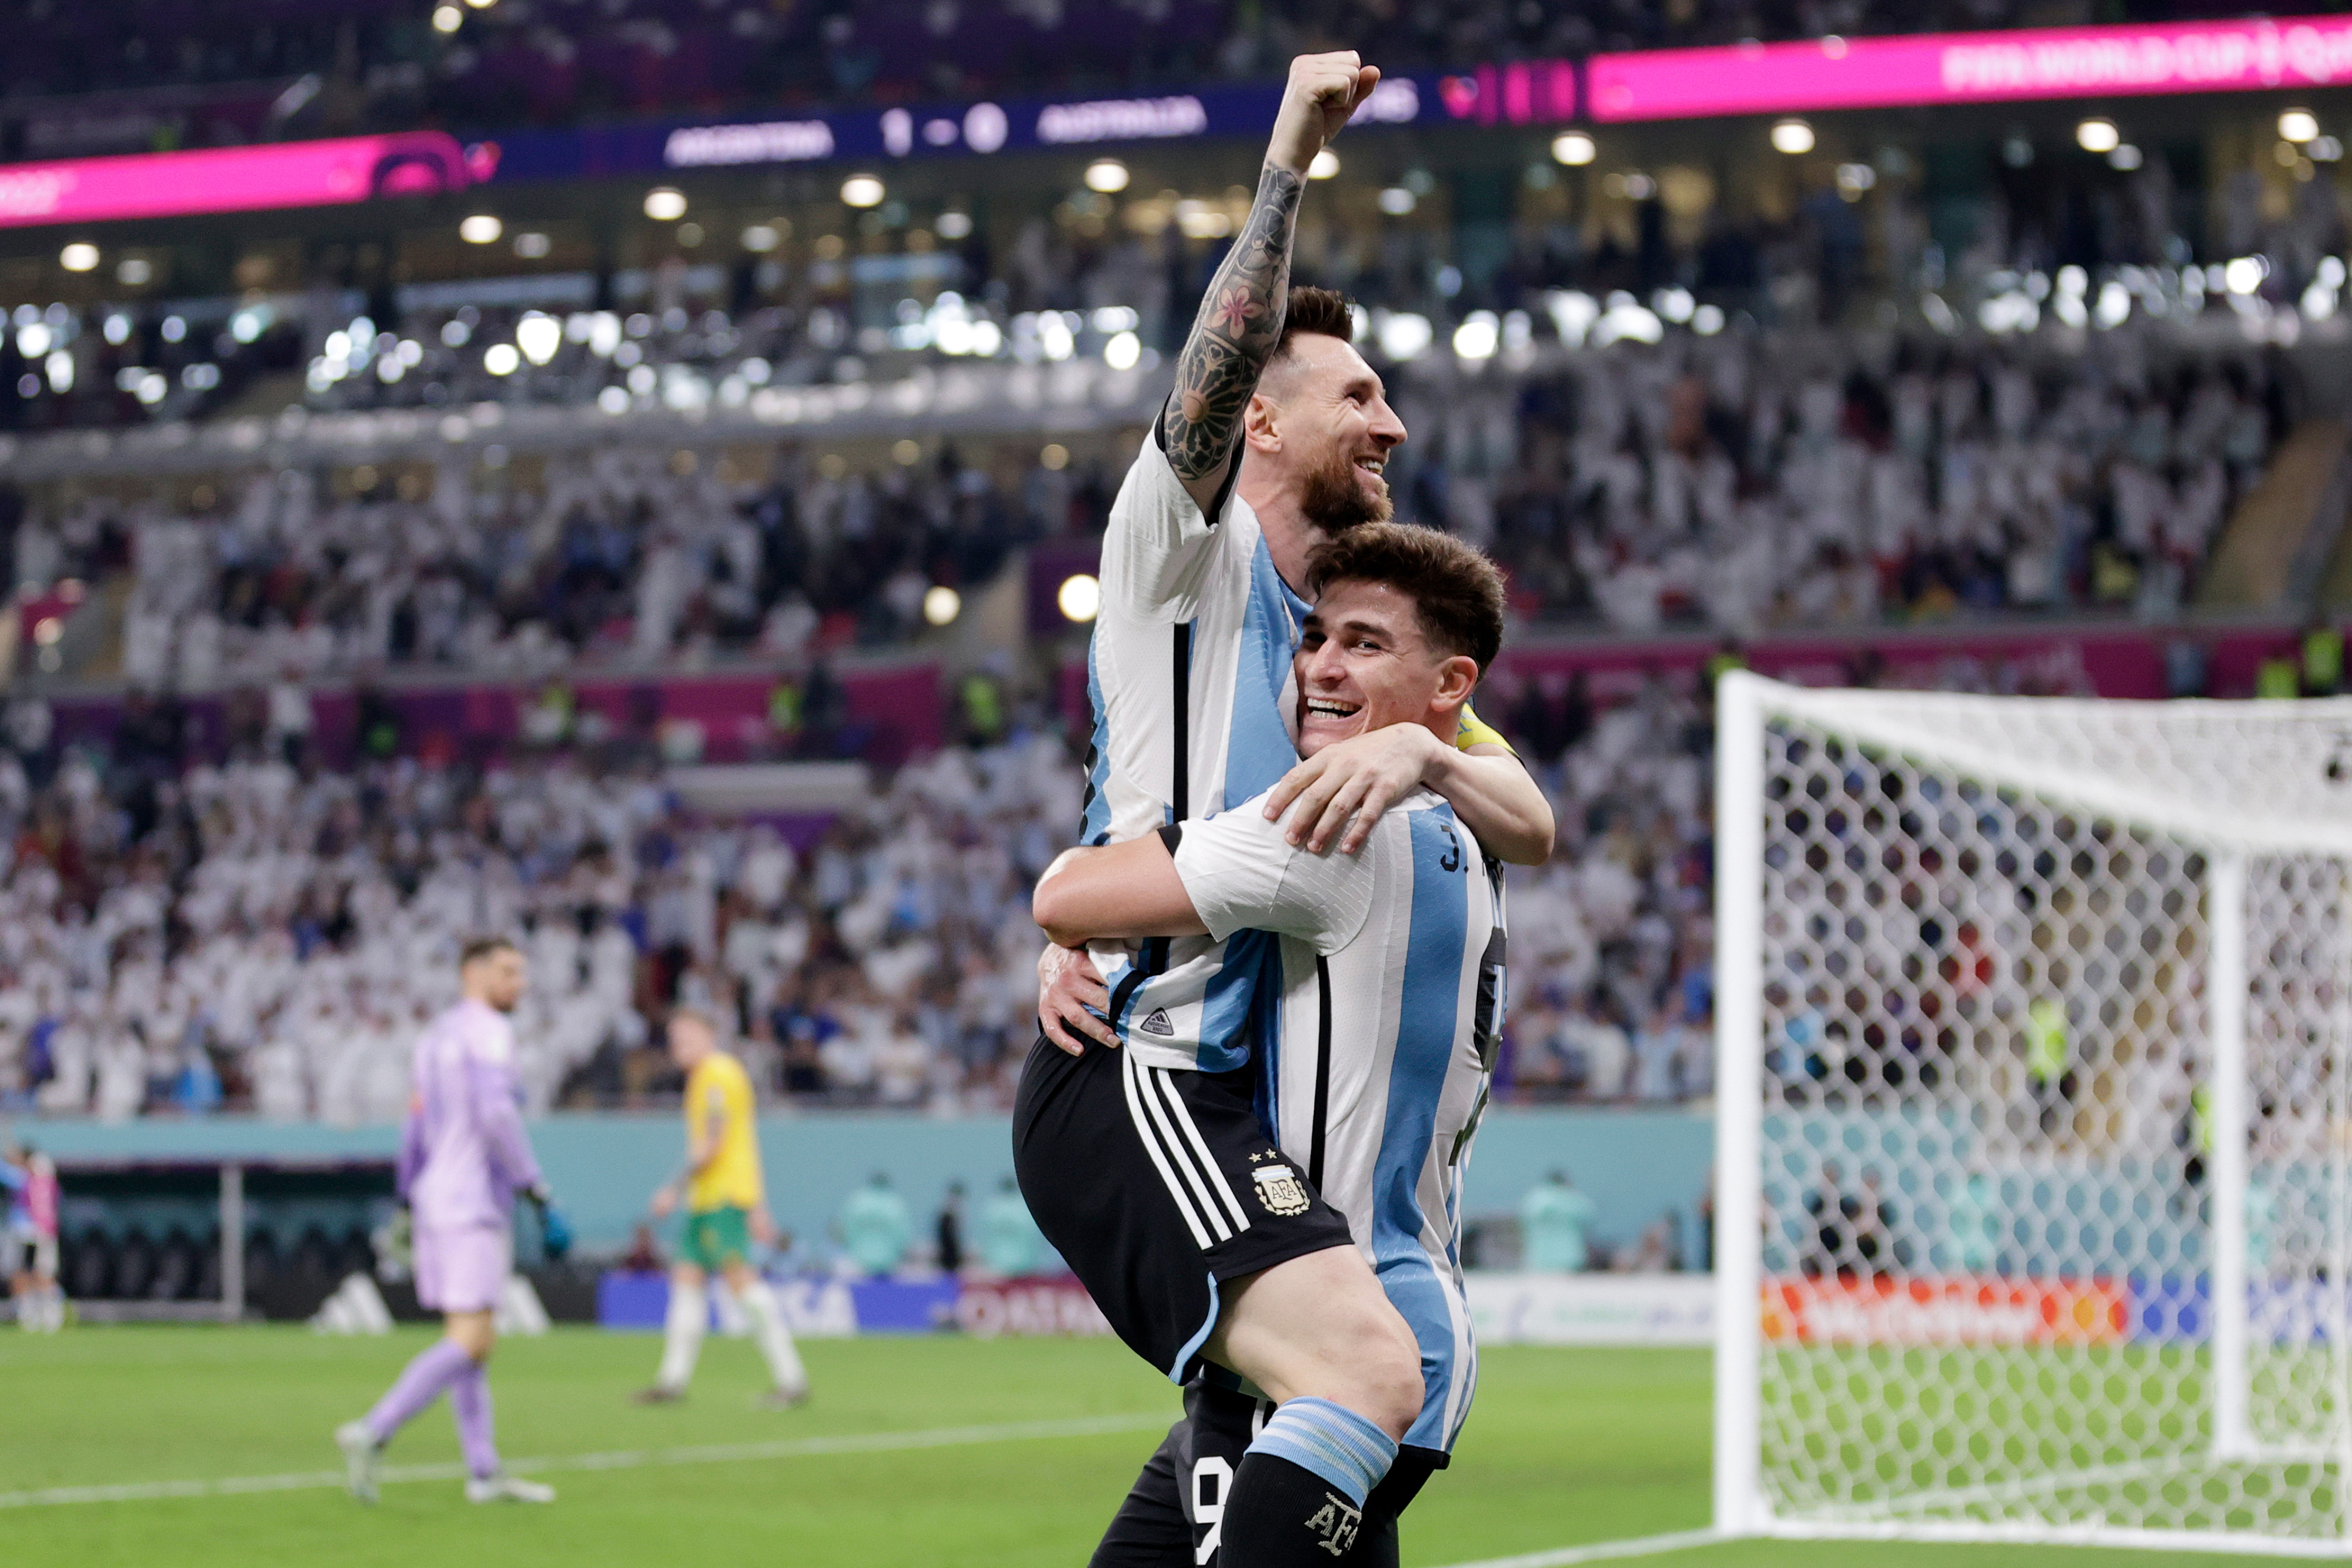 Julián Álvarez celebrates scoring Argentina's second goal with Lionel Messi in a match against Australia at the Ahmad bin Ali Stadium in Al Rayyan, Qatar on Saturday.